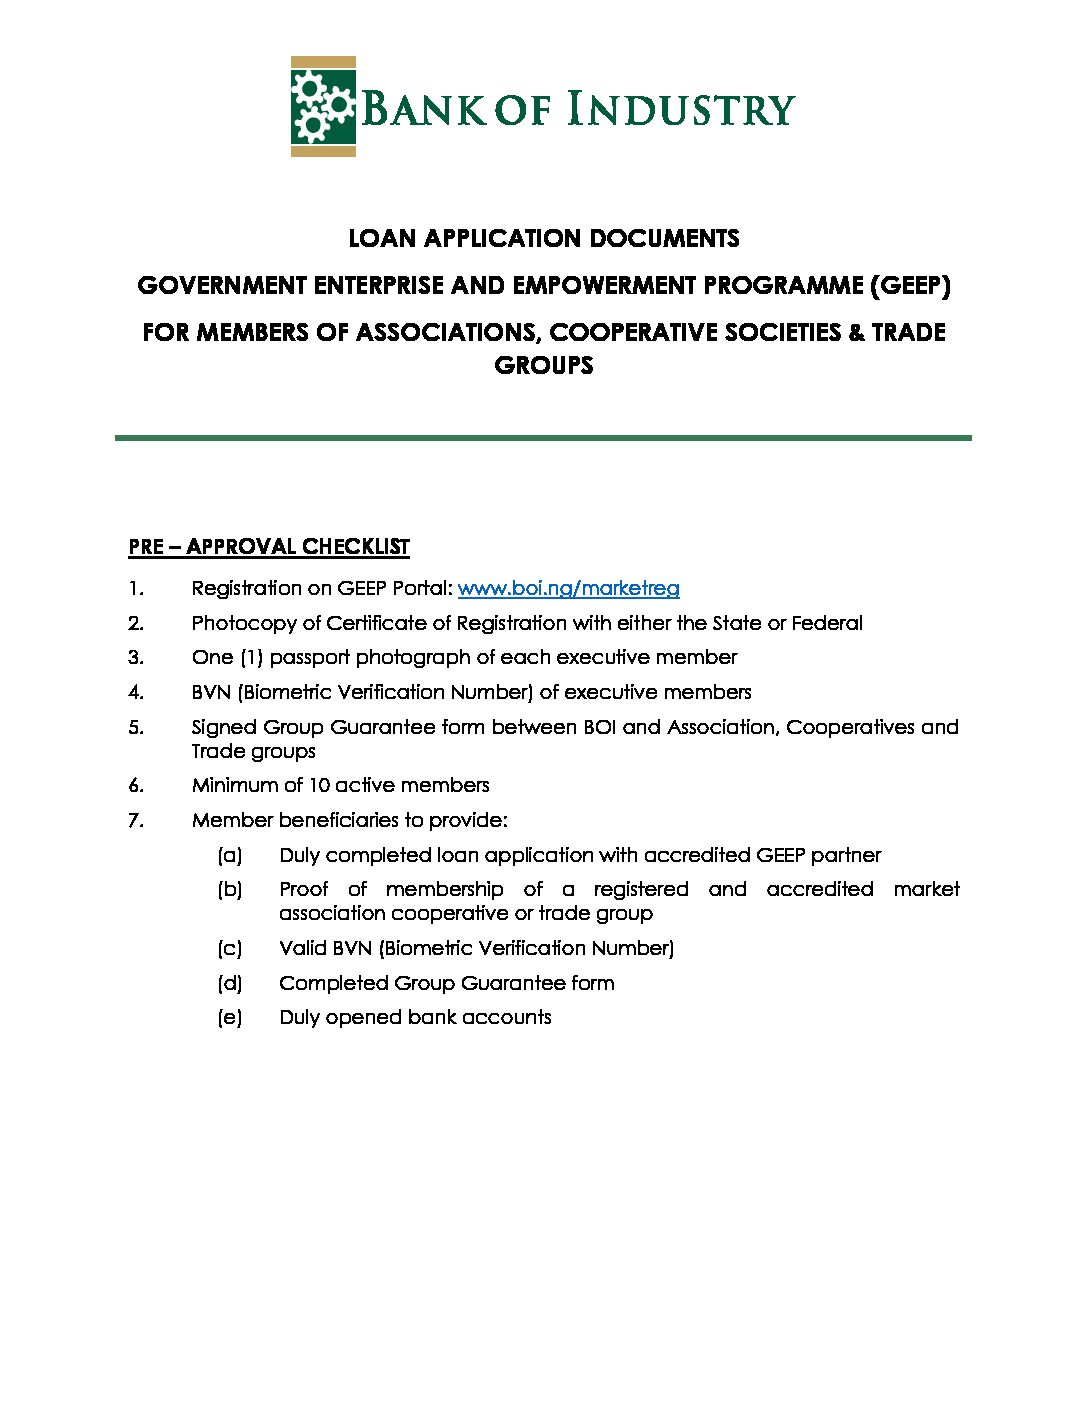 LOAN APPLICATION CHECKLIST GEEP 1 pdf Taraba State Civil Service